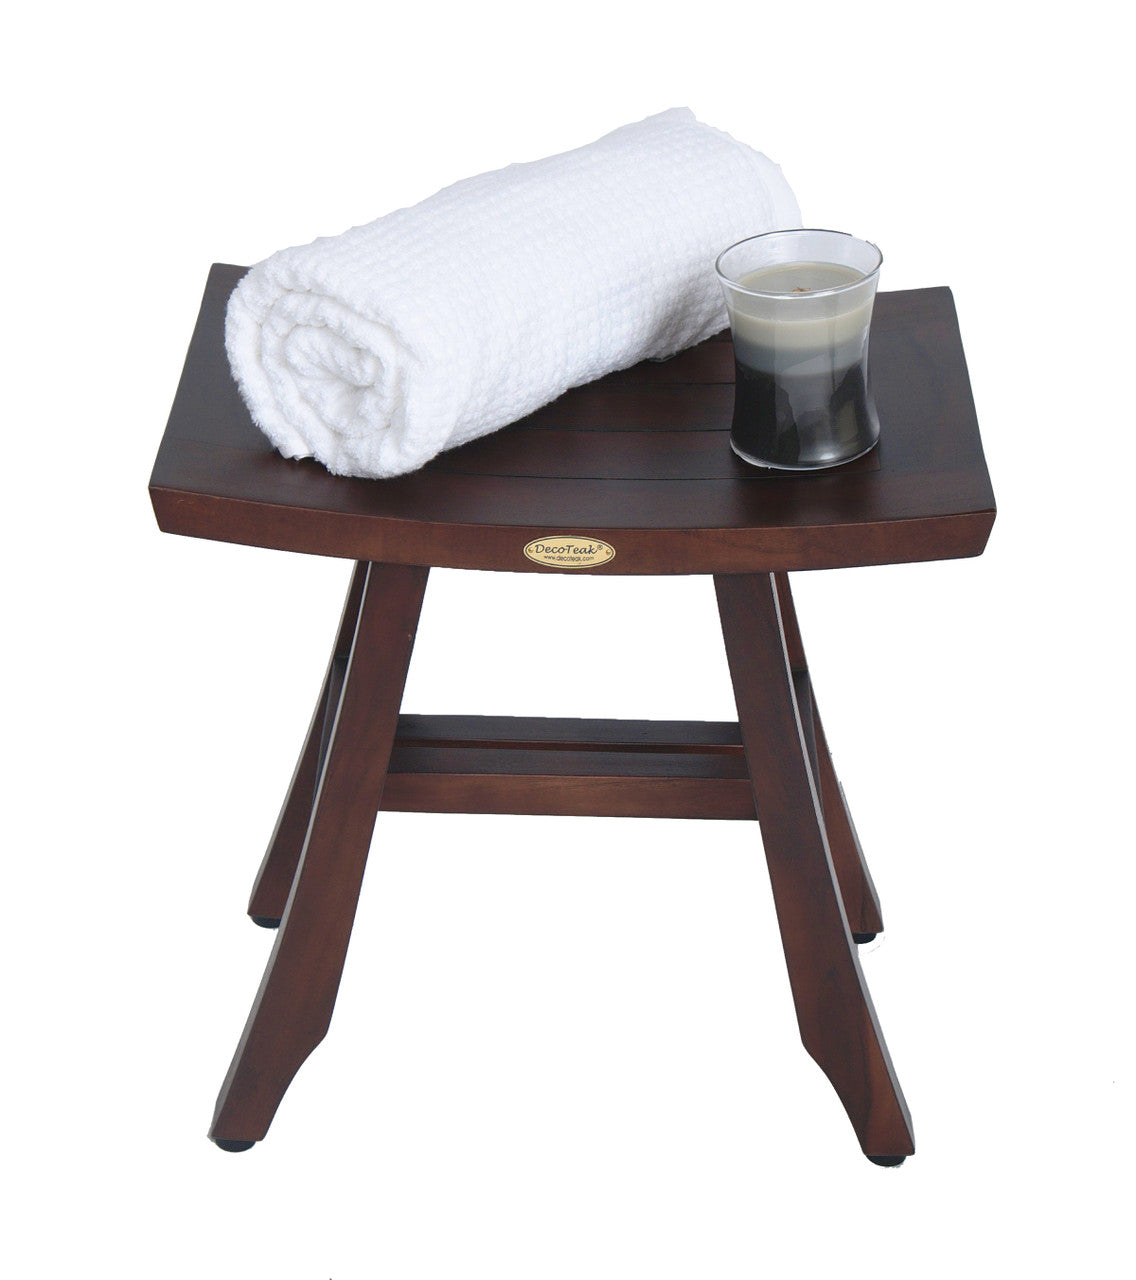 DecoTeak® Satori® 18" Teak Wood Shower Bench in Woodland Brown Finish